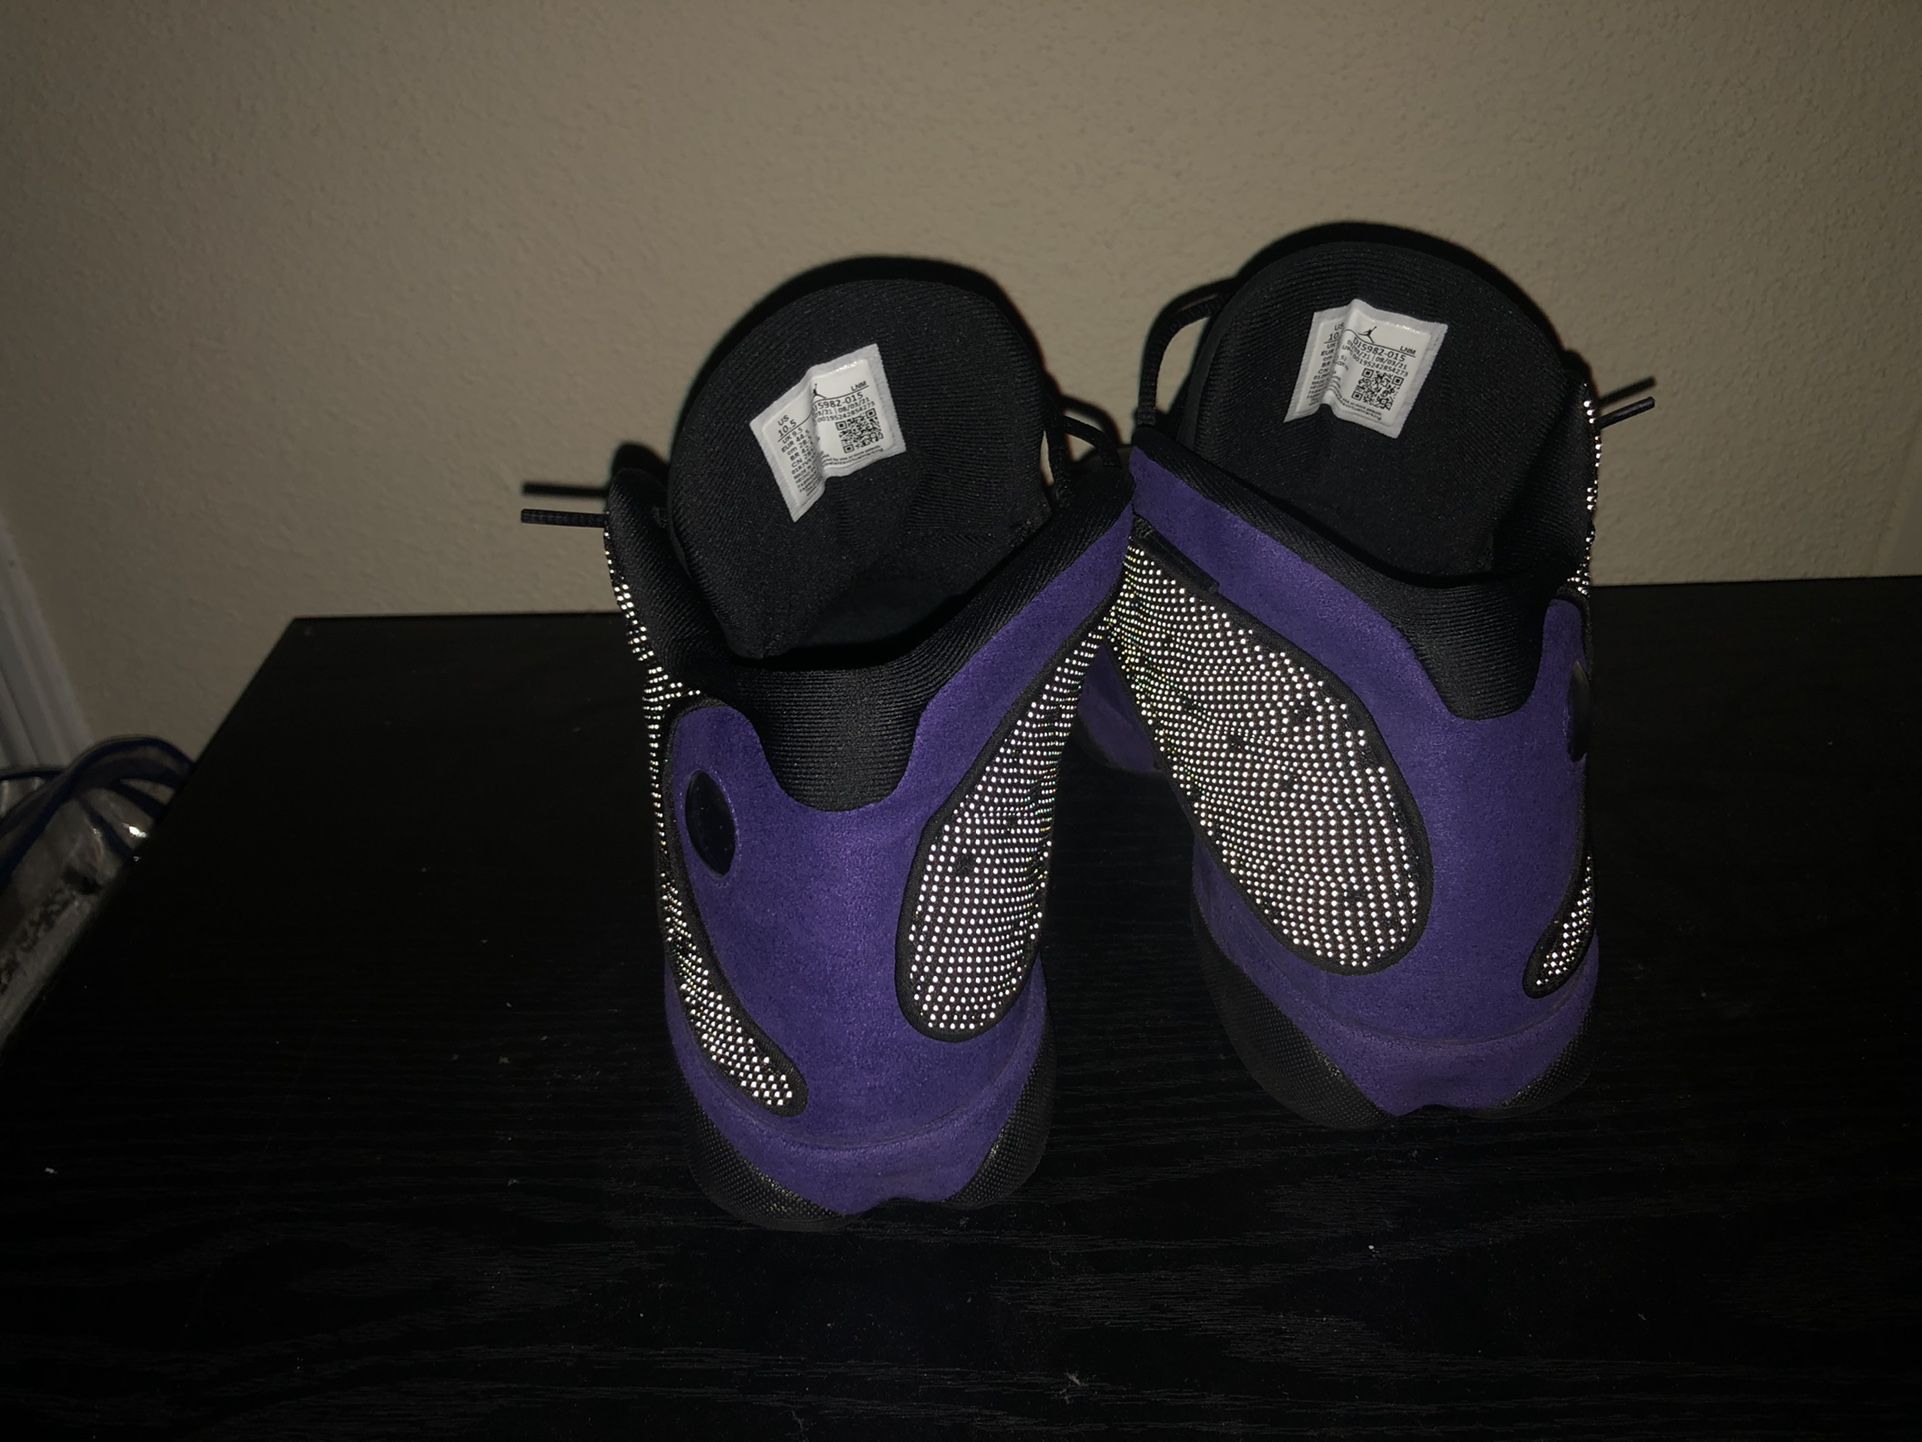 Jordan 13 Retro “Court Purple” (GS7) for Sale in Houston, TX - OfferUp